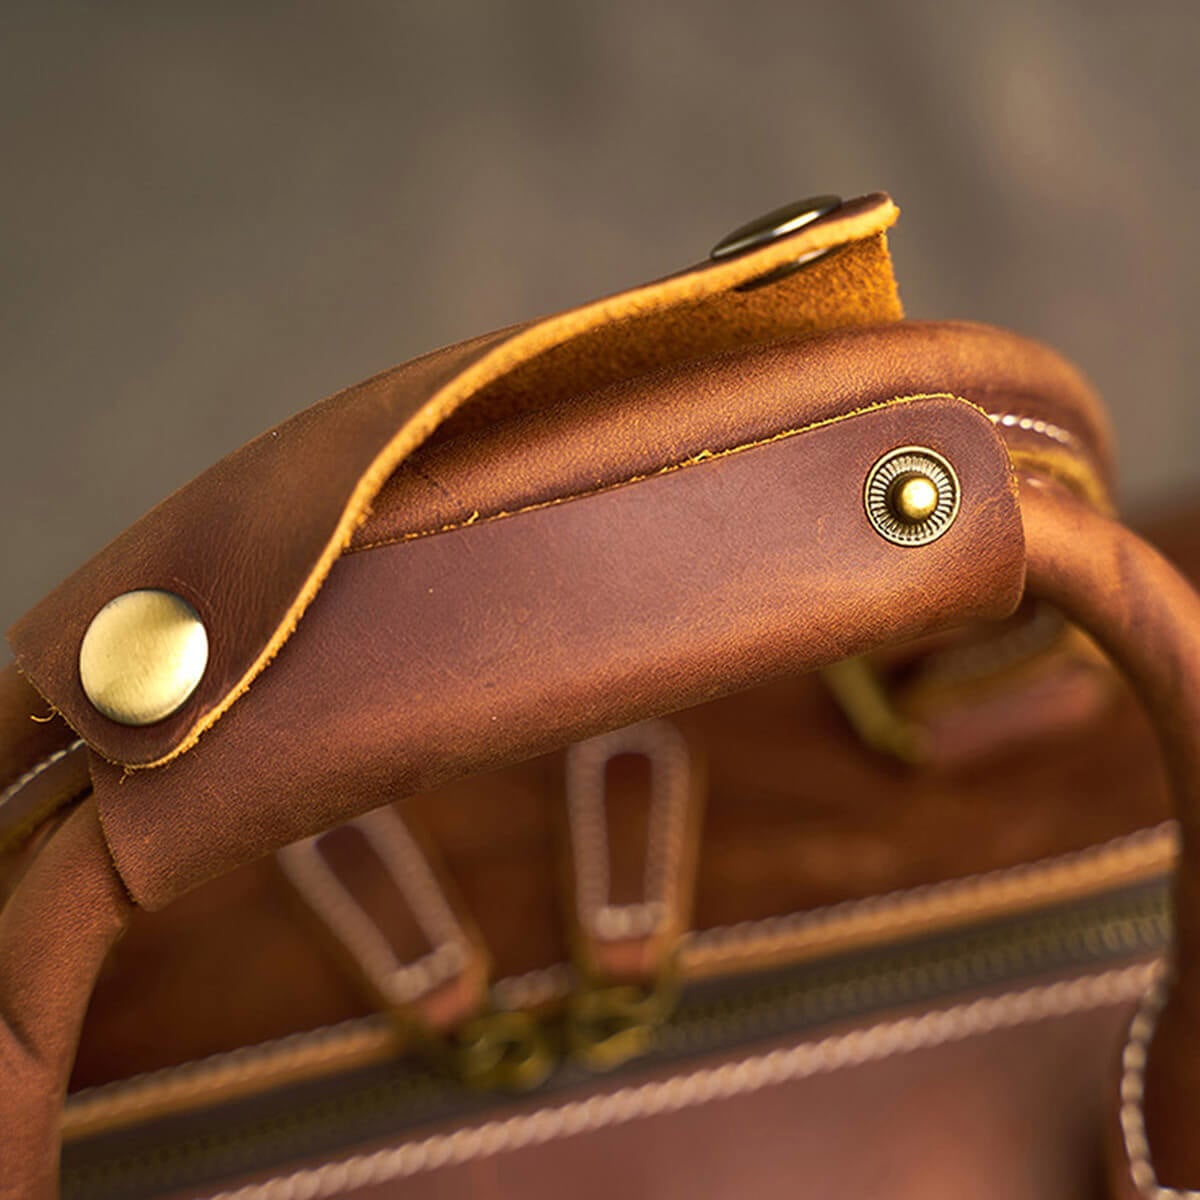 Vintage Travel Business Large Capacity Luggage Leather Bag